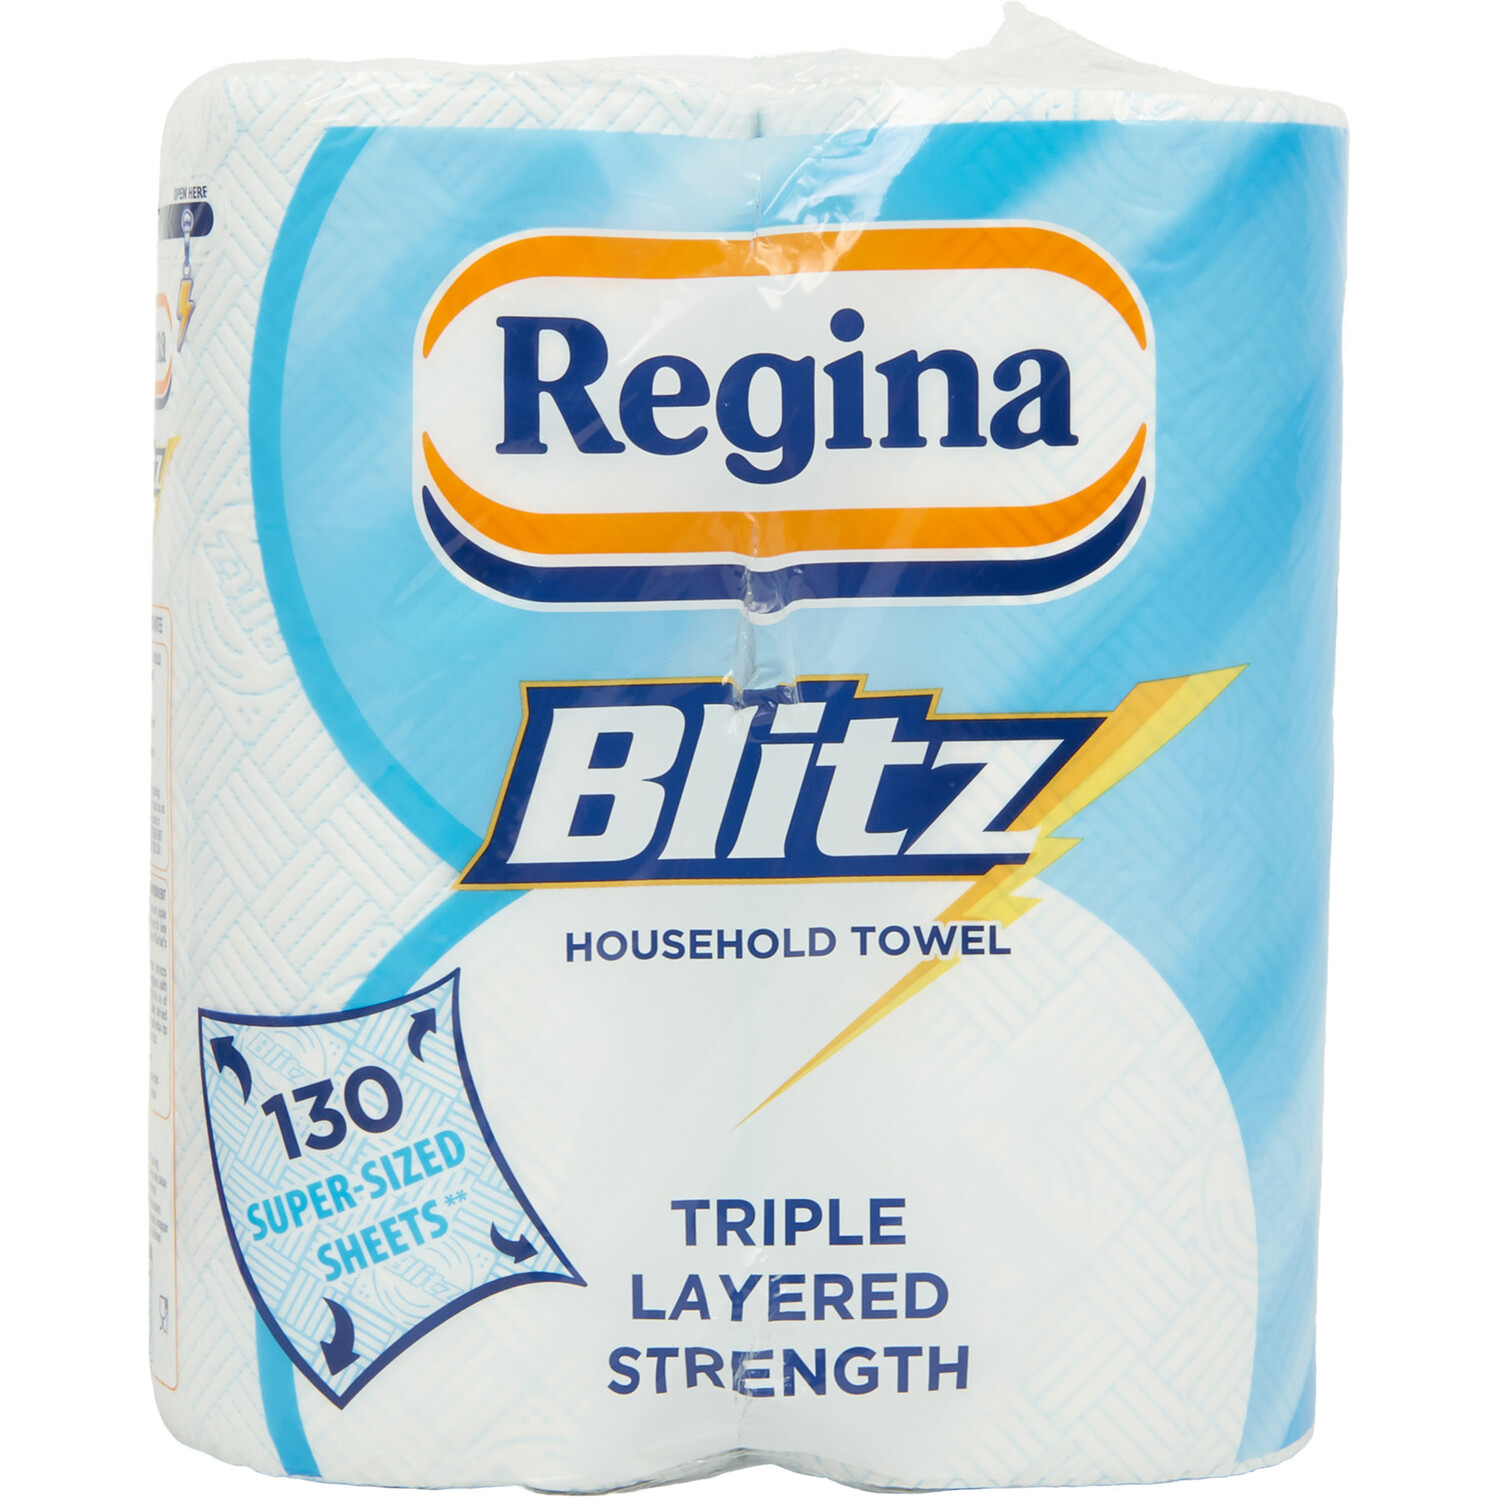 Regina Blitz Household Towel Image 1